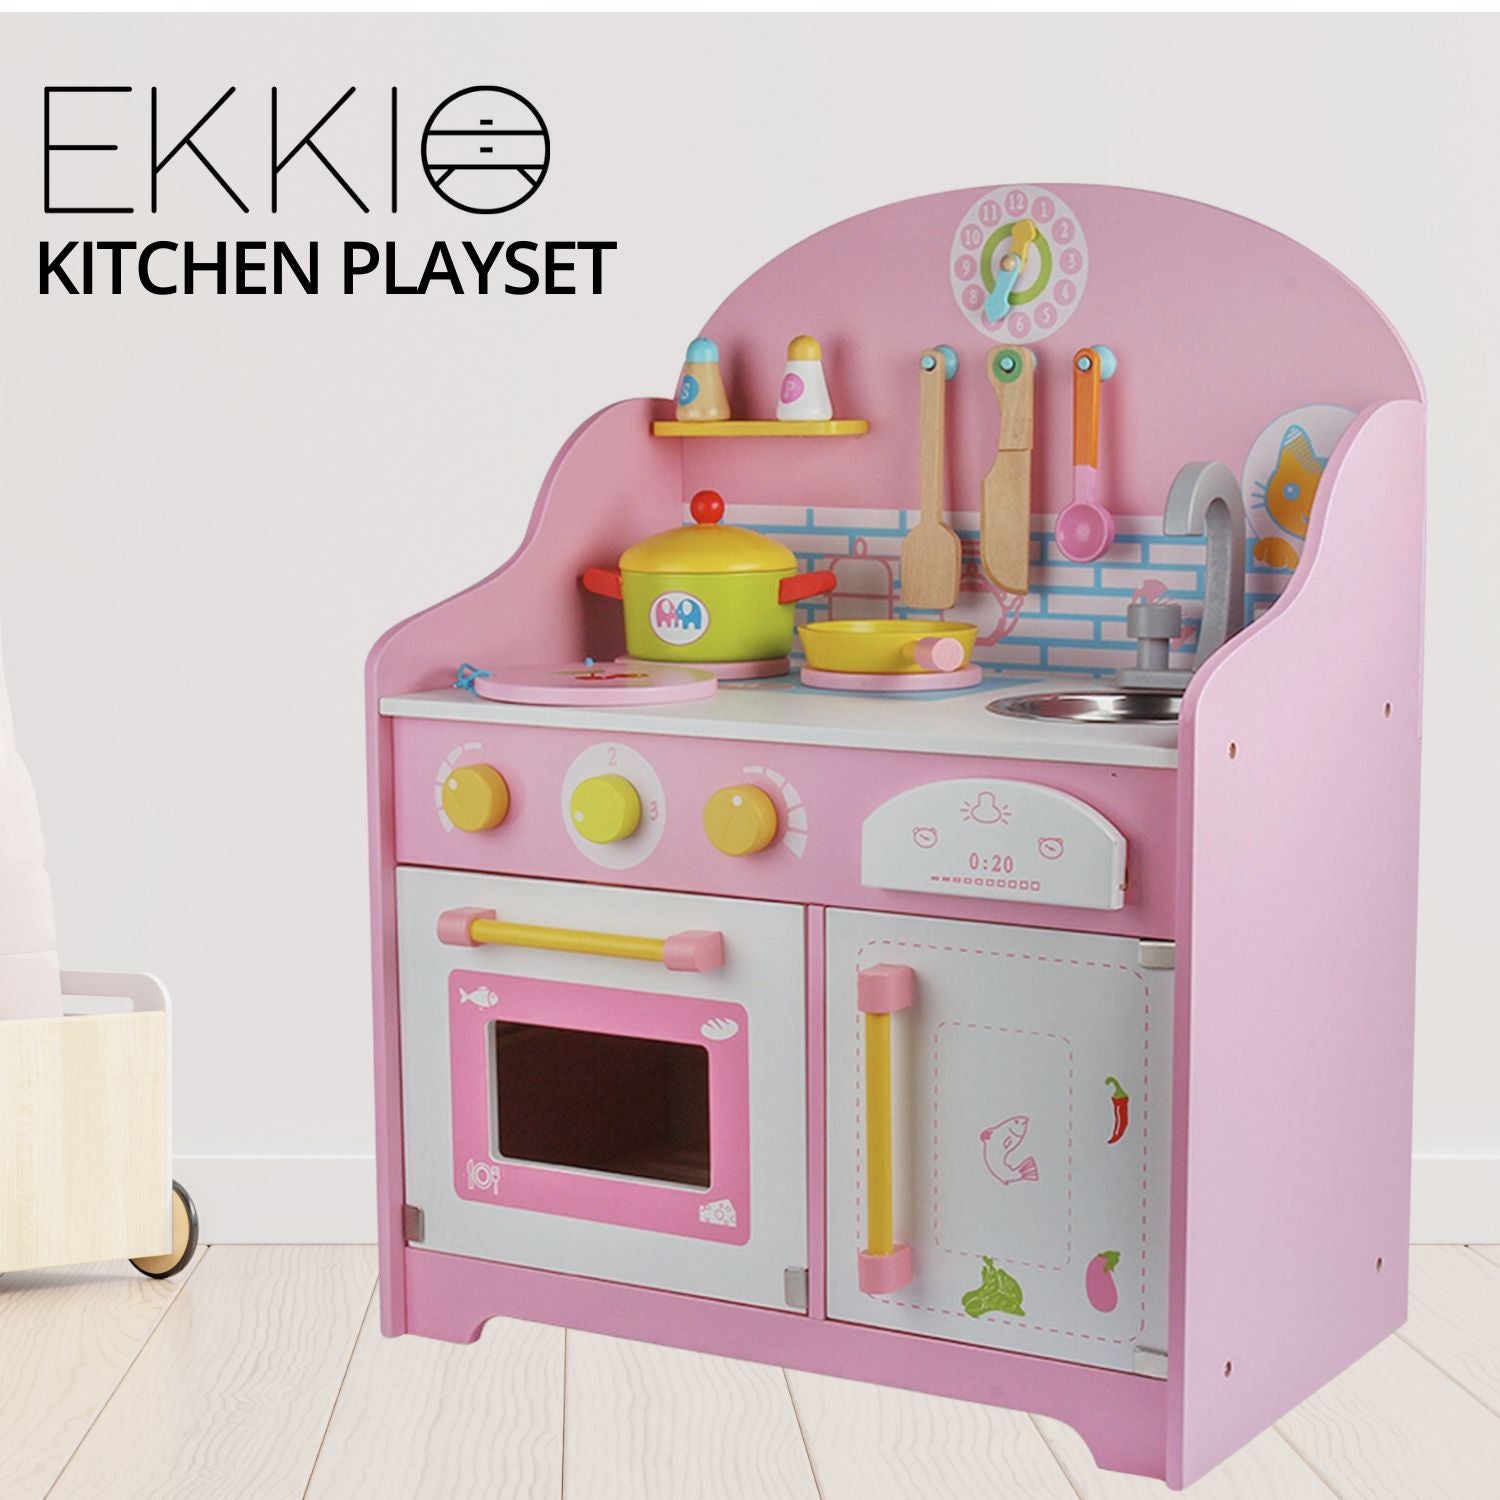 EKKIO Wooden Kitchen Playset for Kids with Clock (Japanese Style Kitchen Set, Pink) EK-KP-109-MS - Little Kids Business